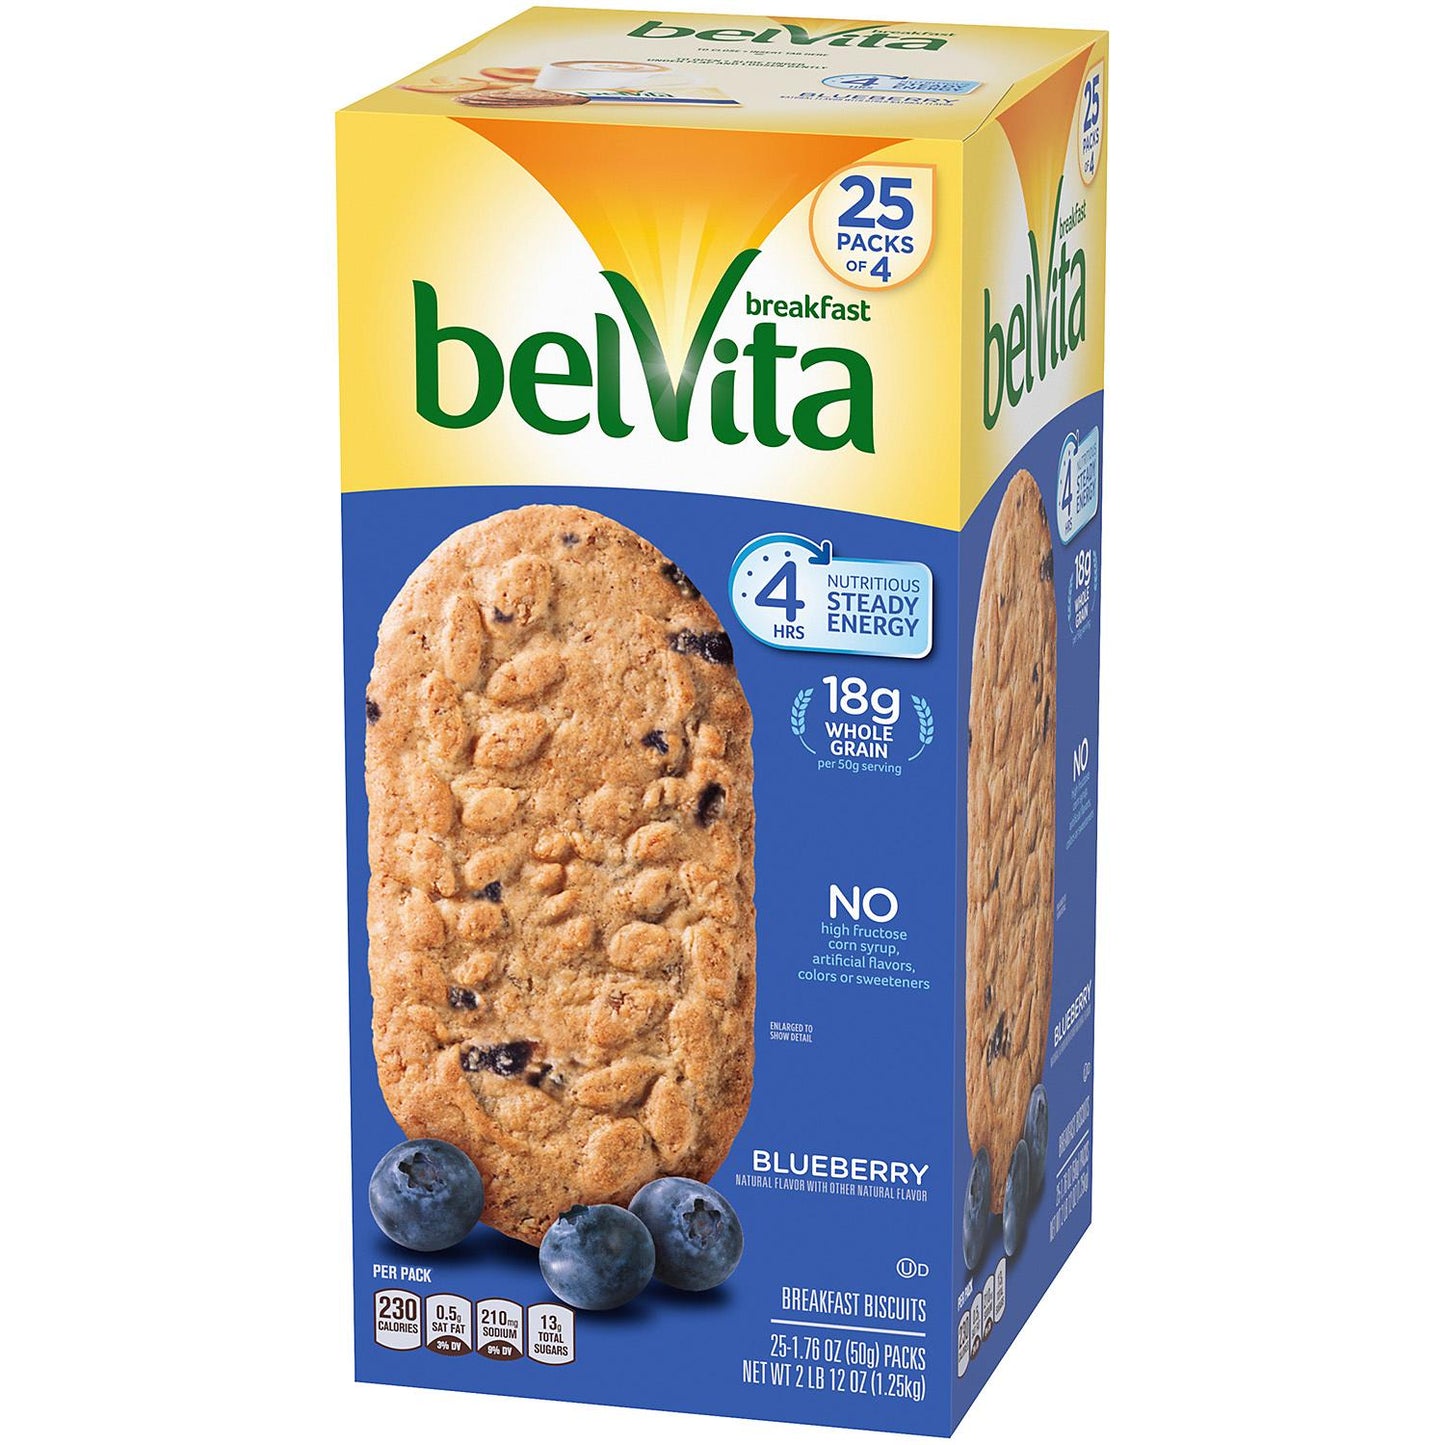 Nabisco Belvita Blueberry Breakfast Biscuits - 4ct/25pk